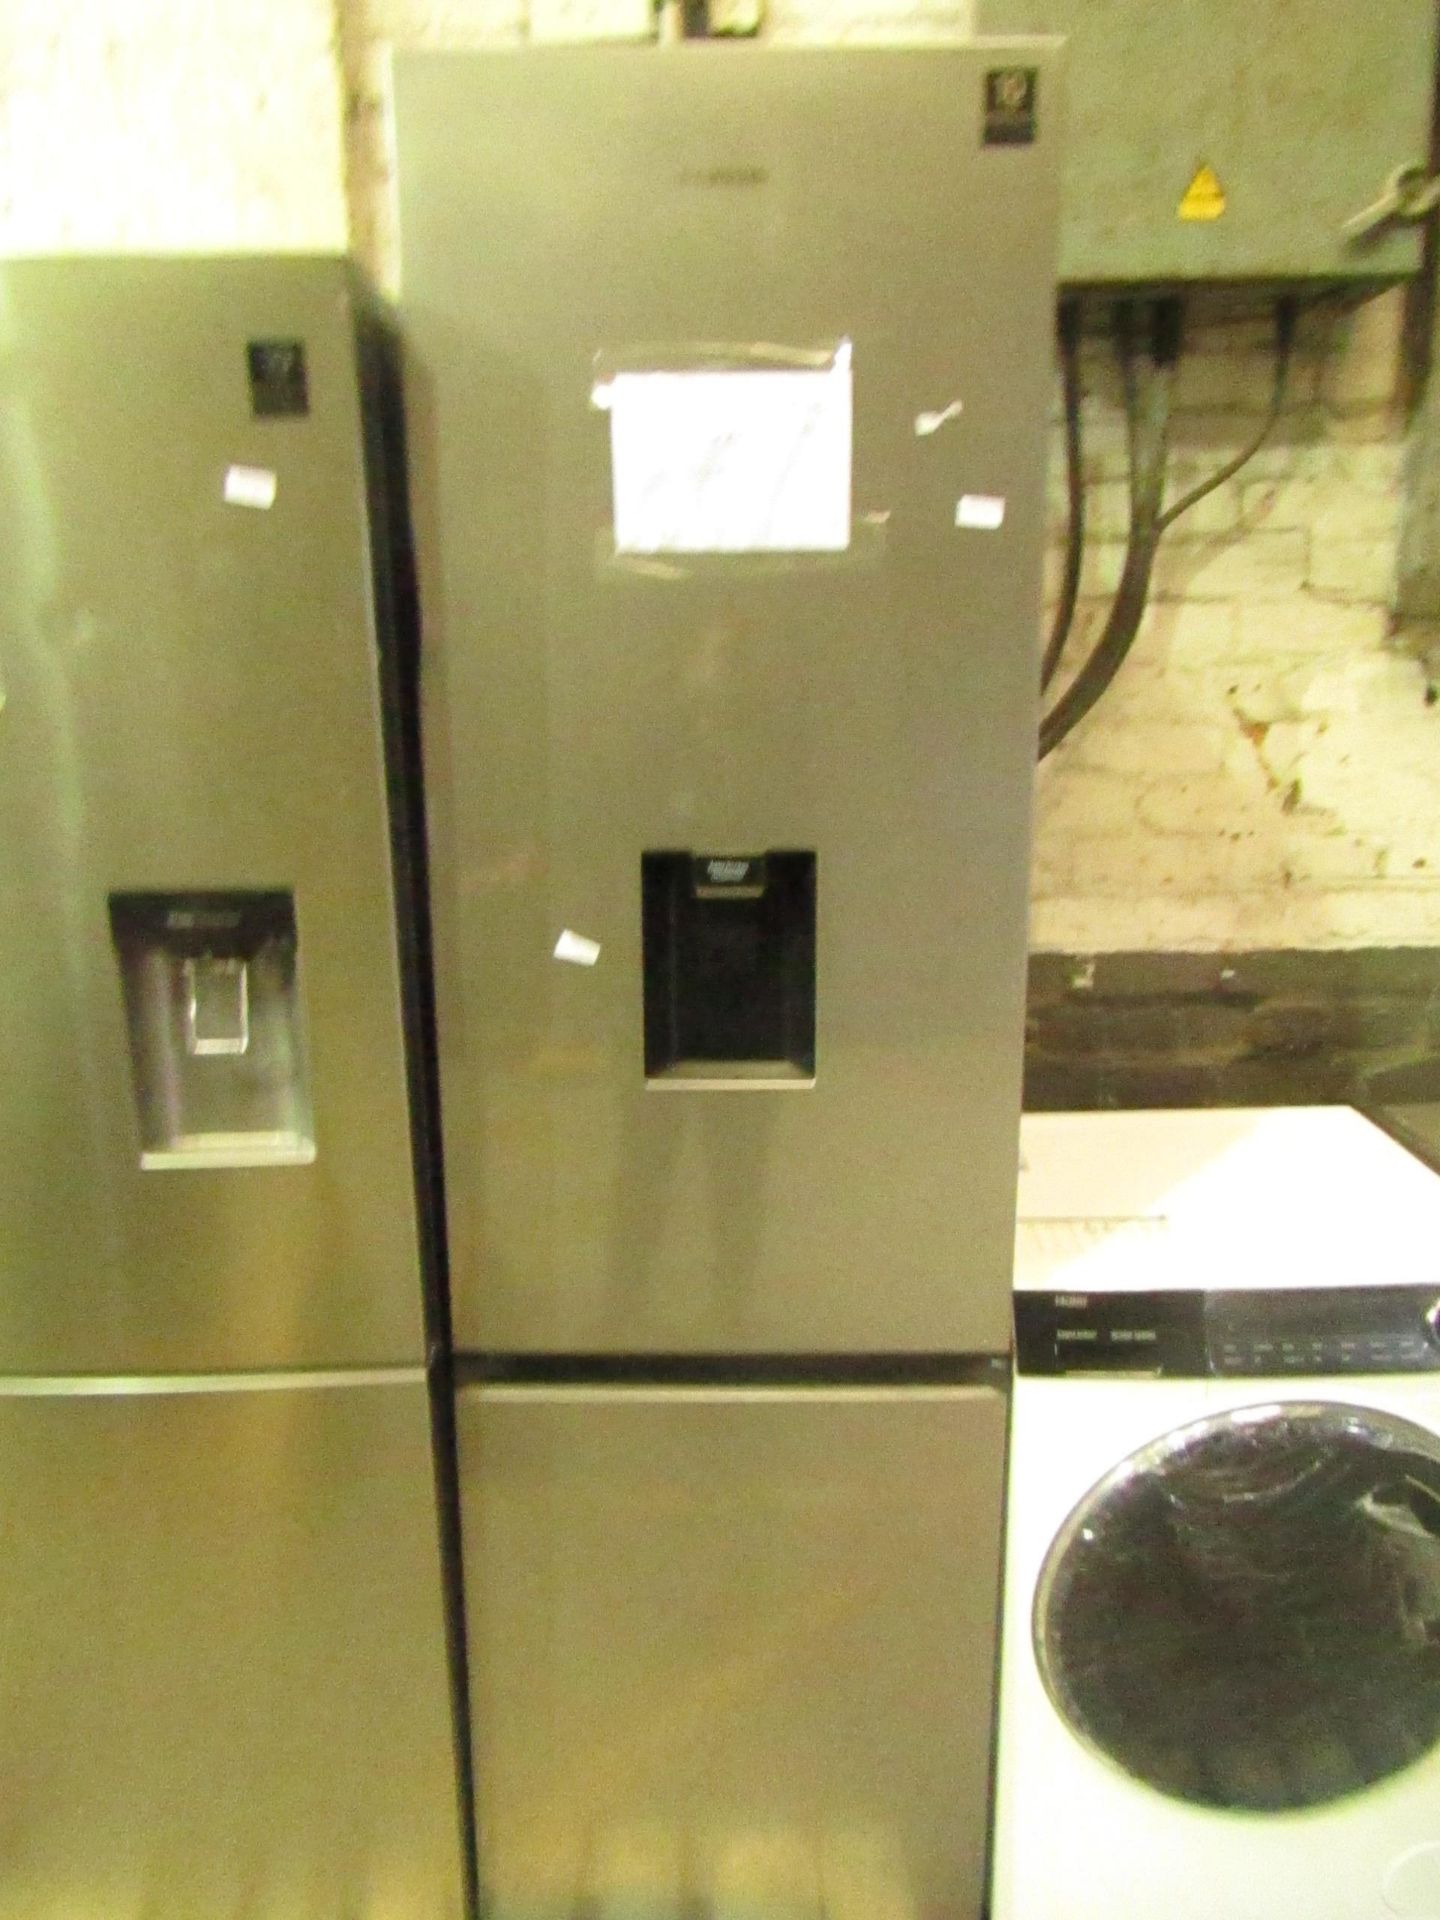 Samsung RB38T633ESA 70/30 fridge freezer, tested working, RRP £699